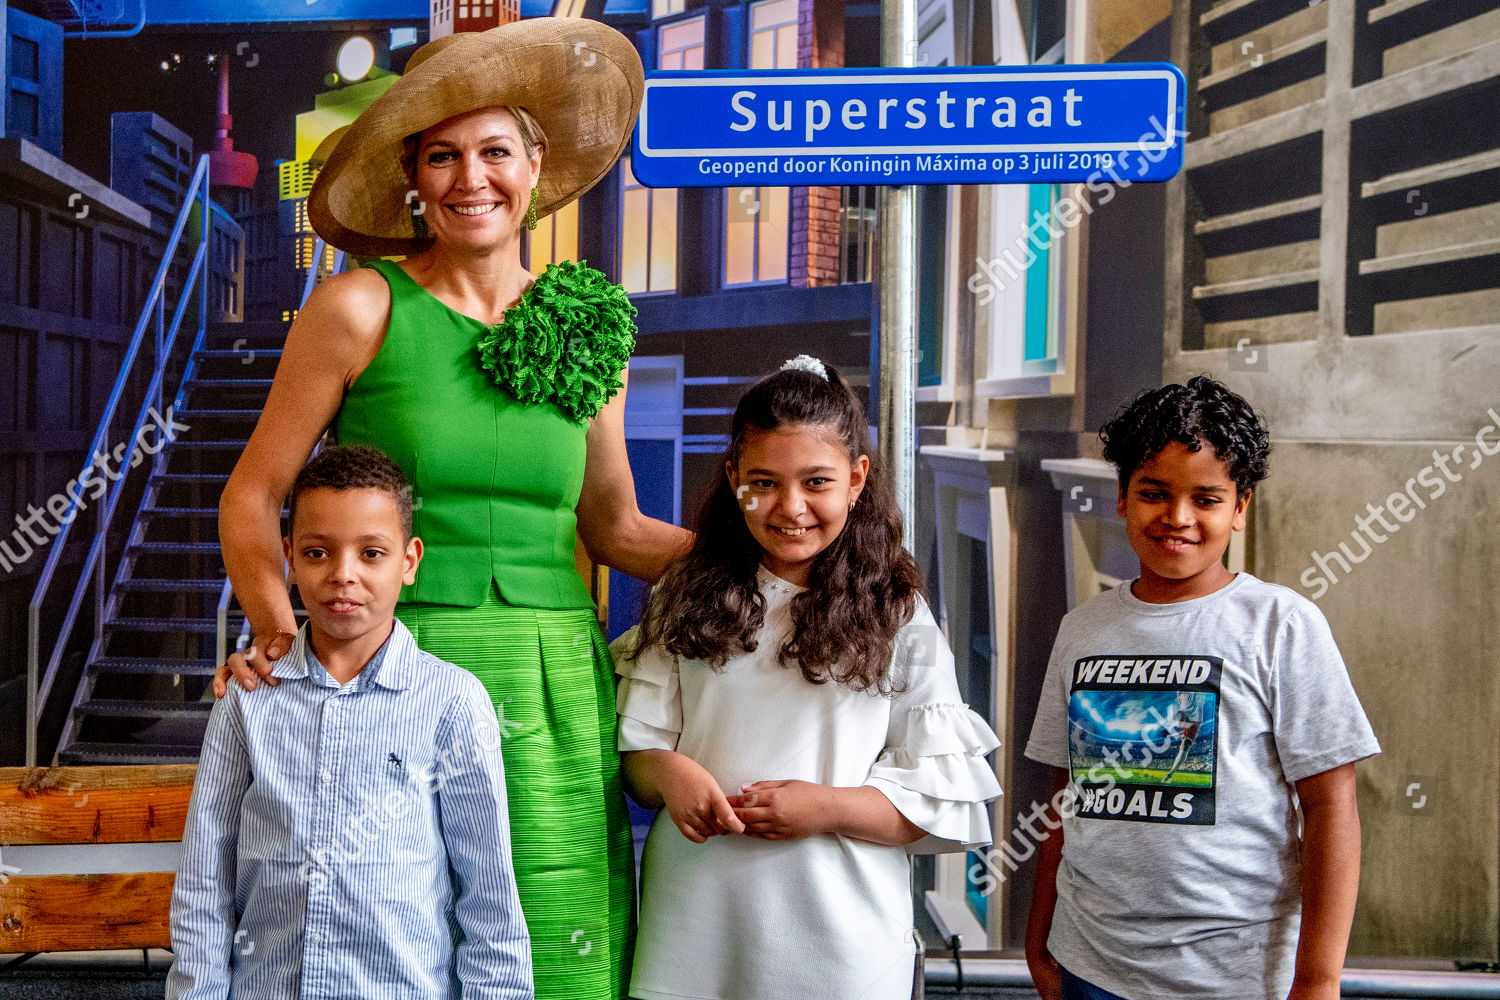 queen-maxima-opens-the-superstraat-exhibition-at-the-wereldmuseum-rotterdam-netherlands-shutterstock-editorial-10327111v.jpg